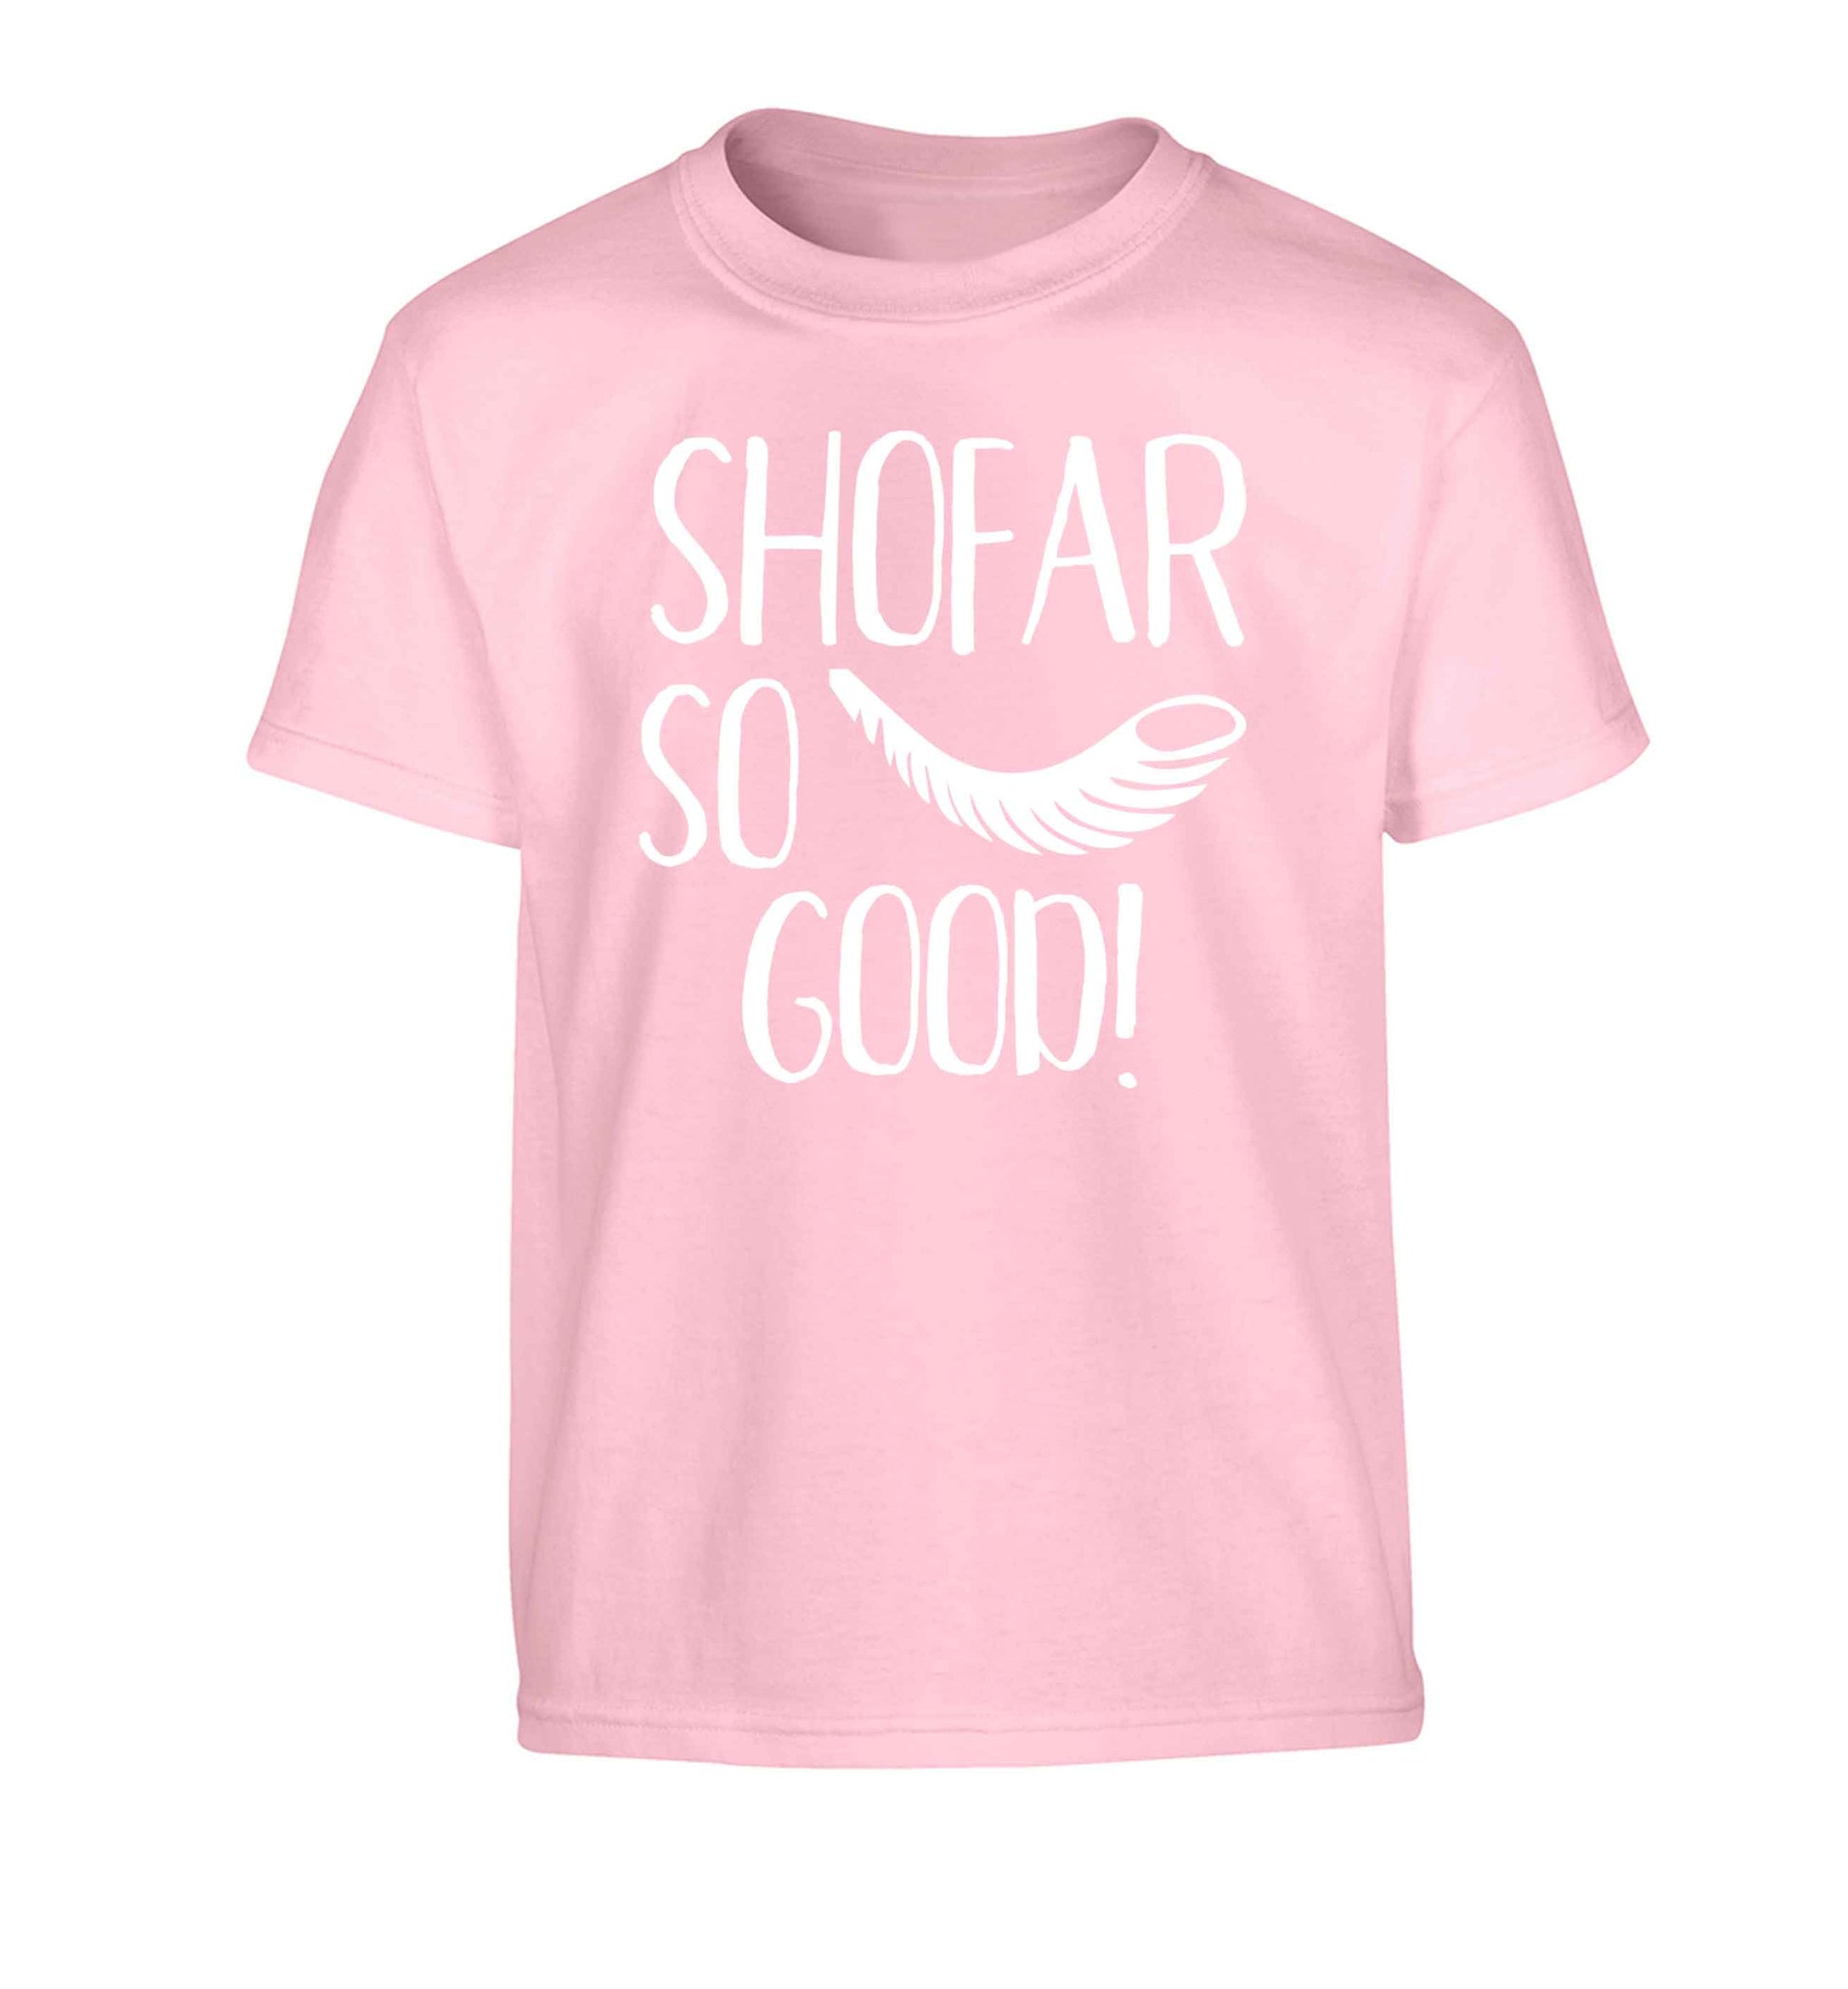 Shofar so good! Children's light pink Tshirt 12-13 Years